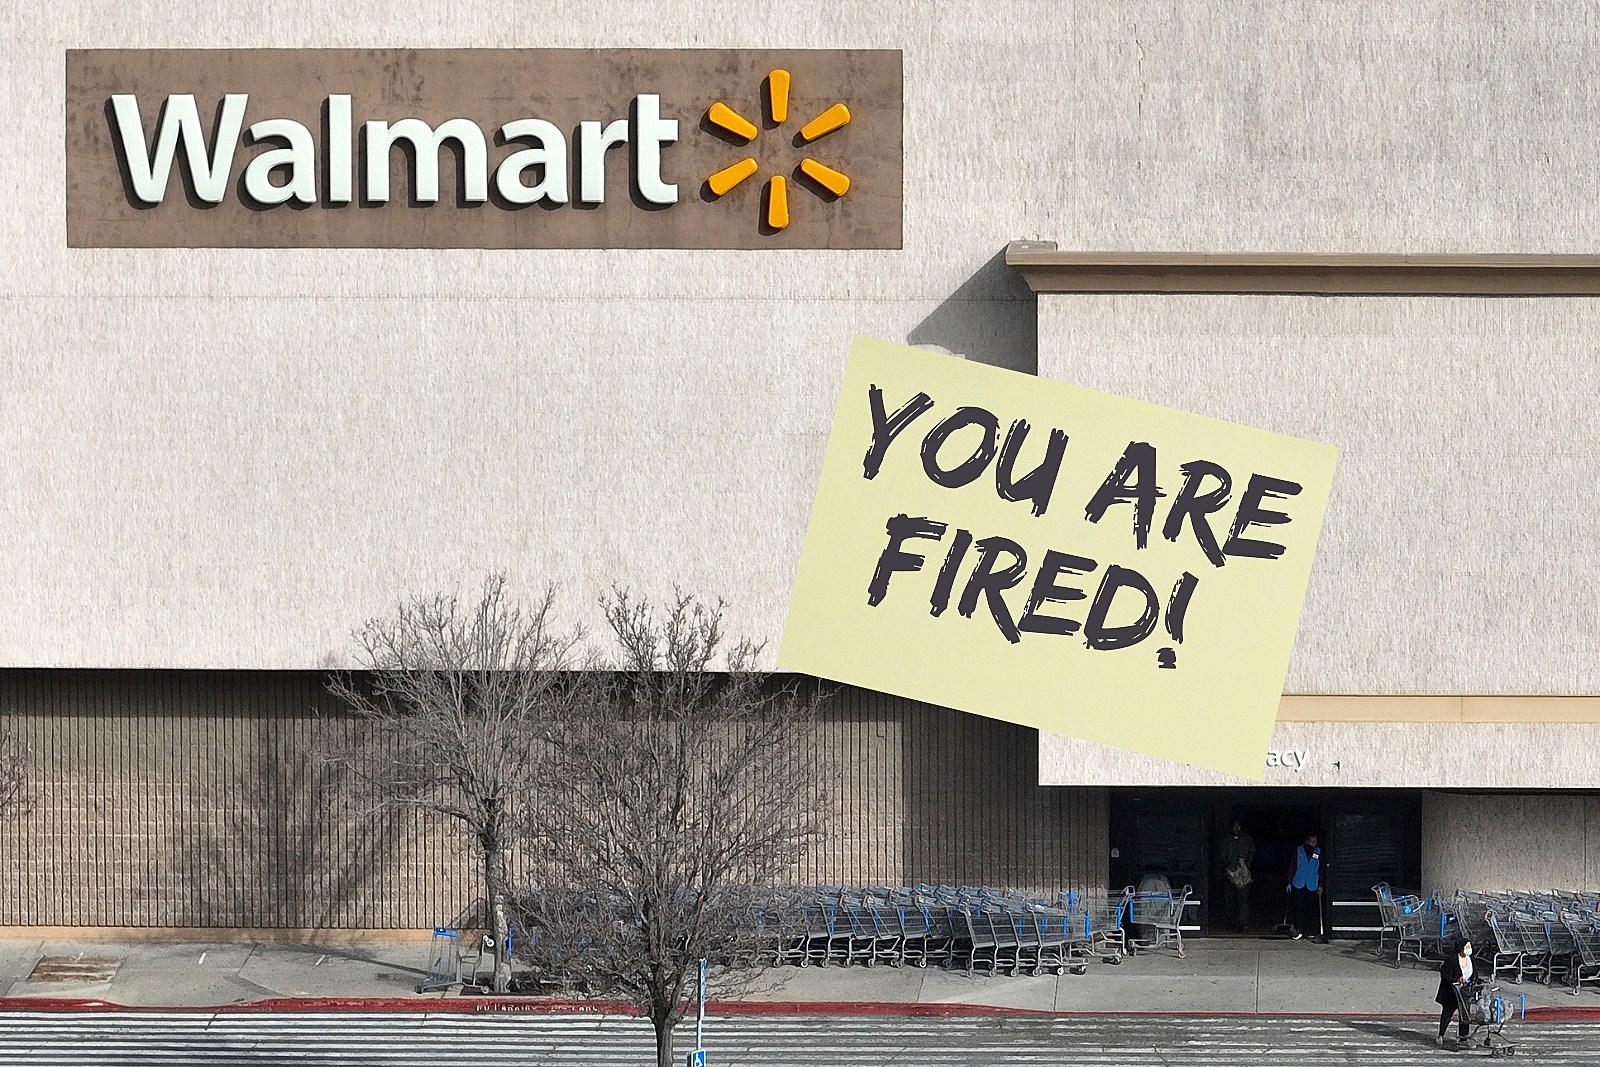 Walmart announces limited sensory-friendly shopping hours